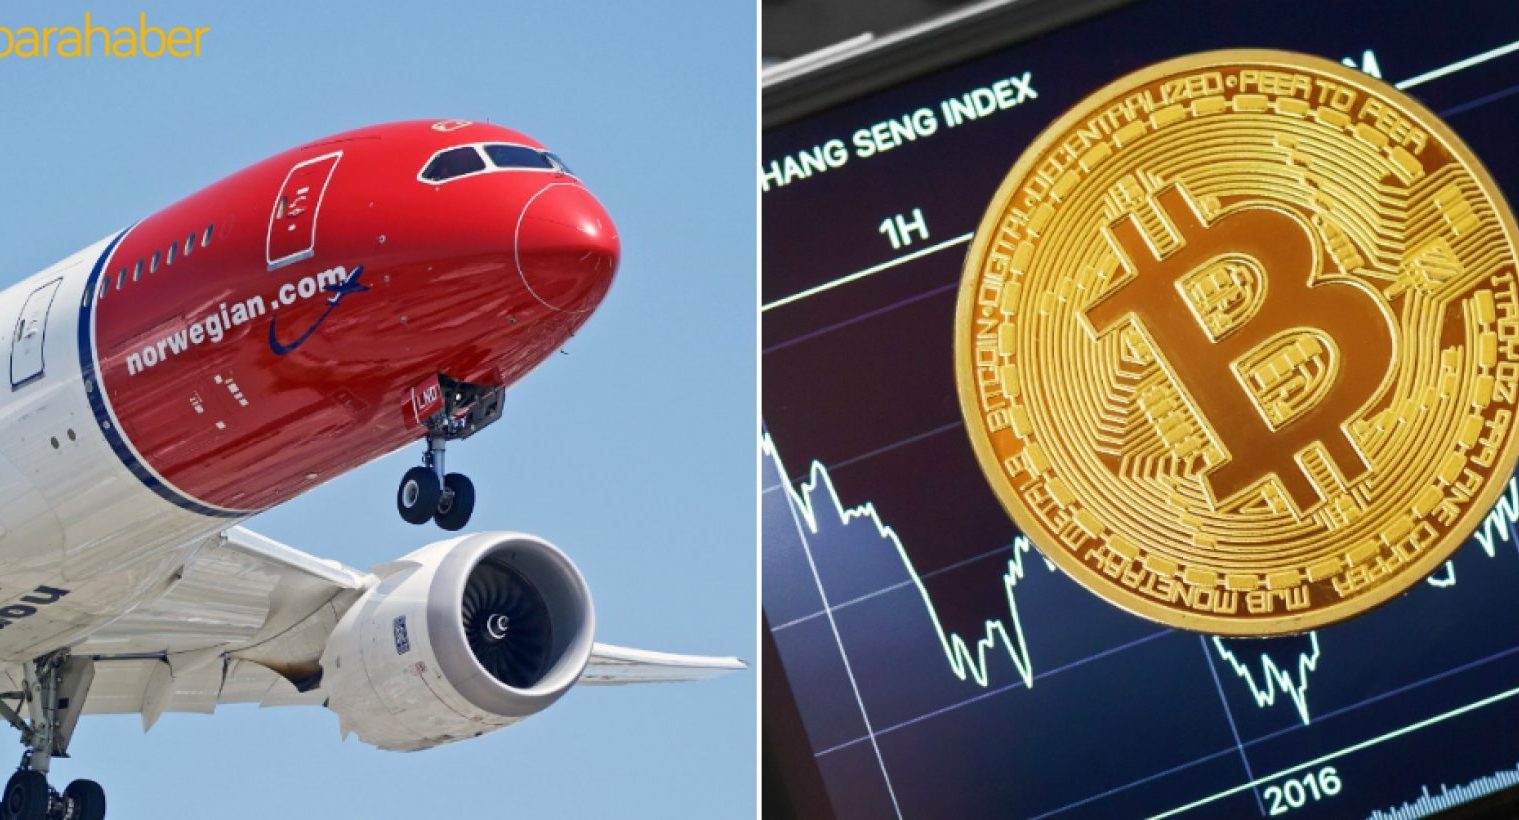 Norwegian Air CEO’su Bitcoin borsası açacak